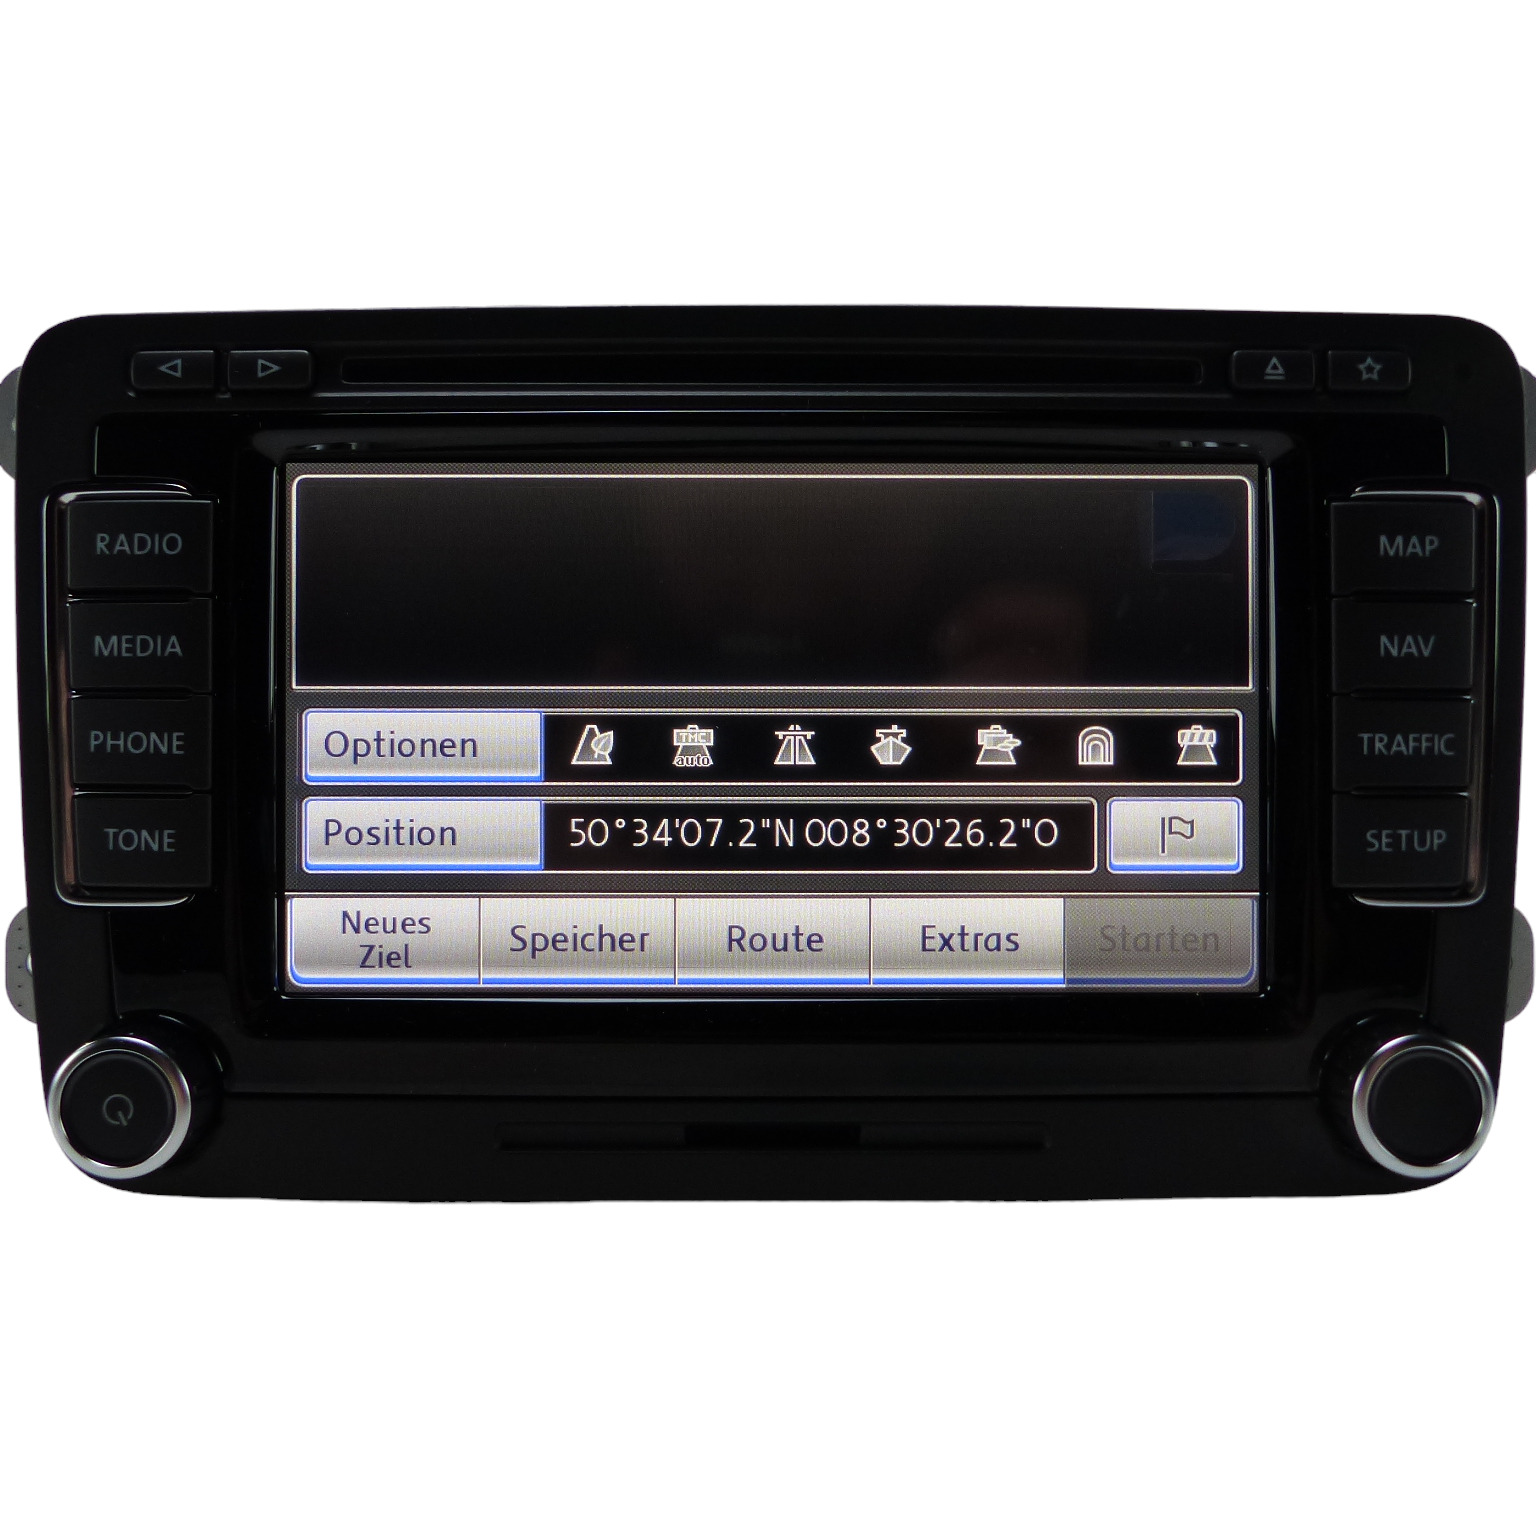 VW RNS 510 DVD Radio Navigation EU MAP V16 Touchscreen MP3 SD VW Golf VI Touran